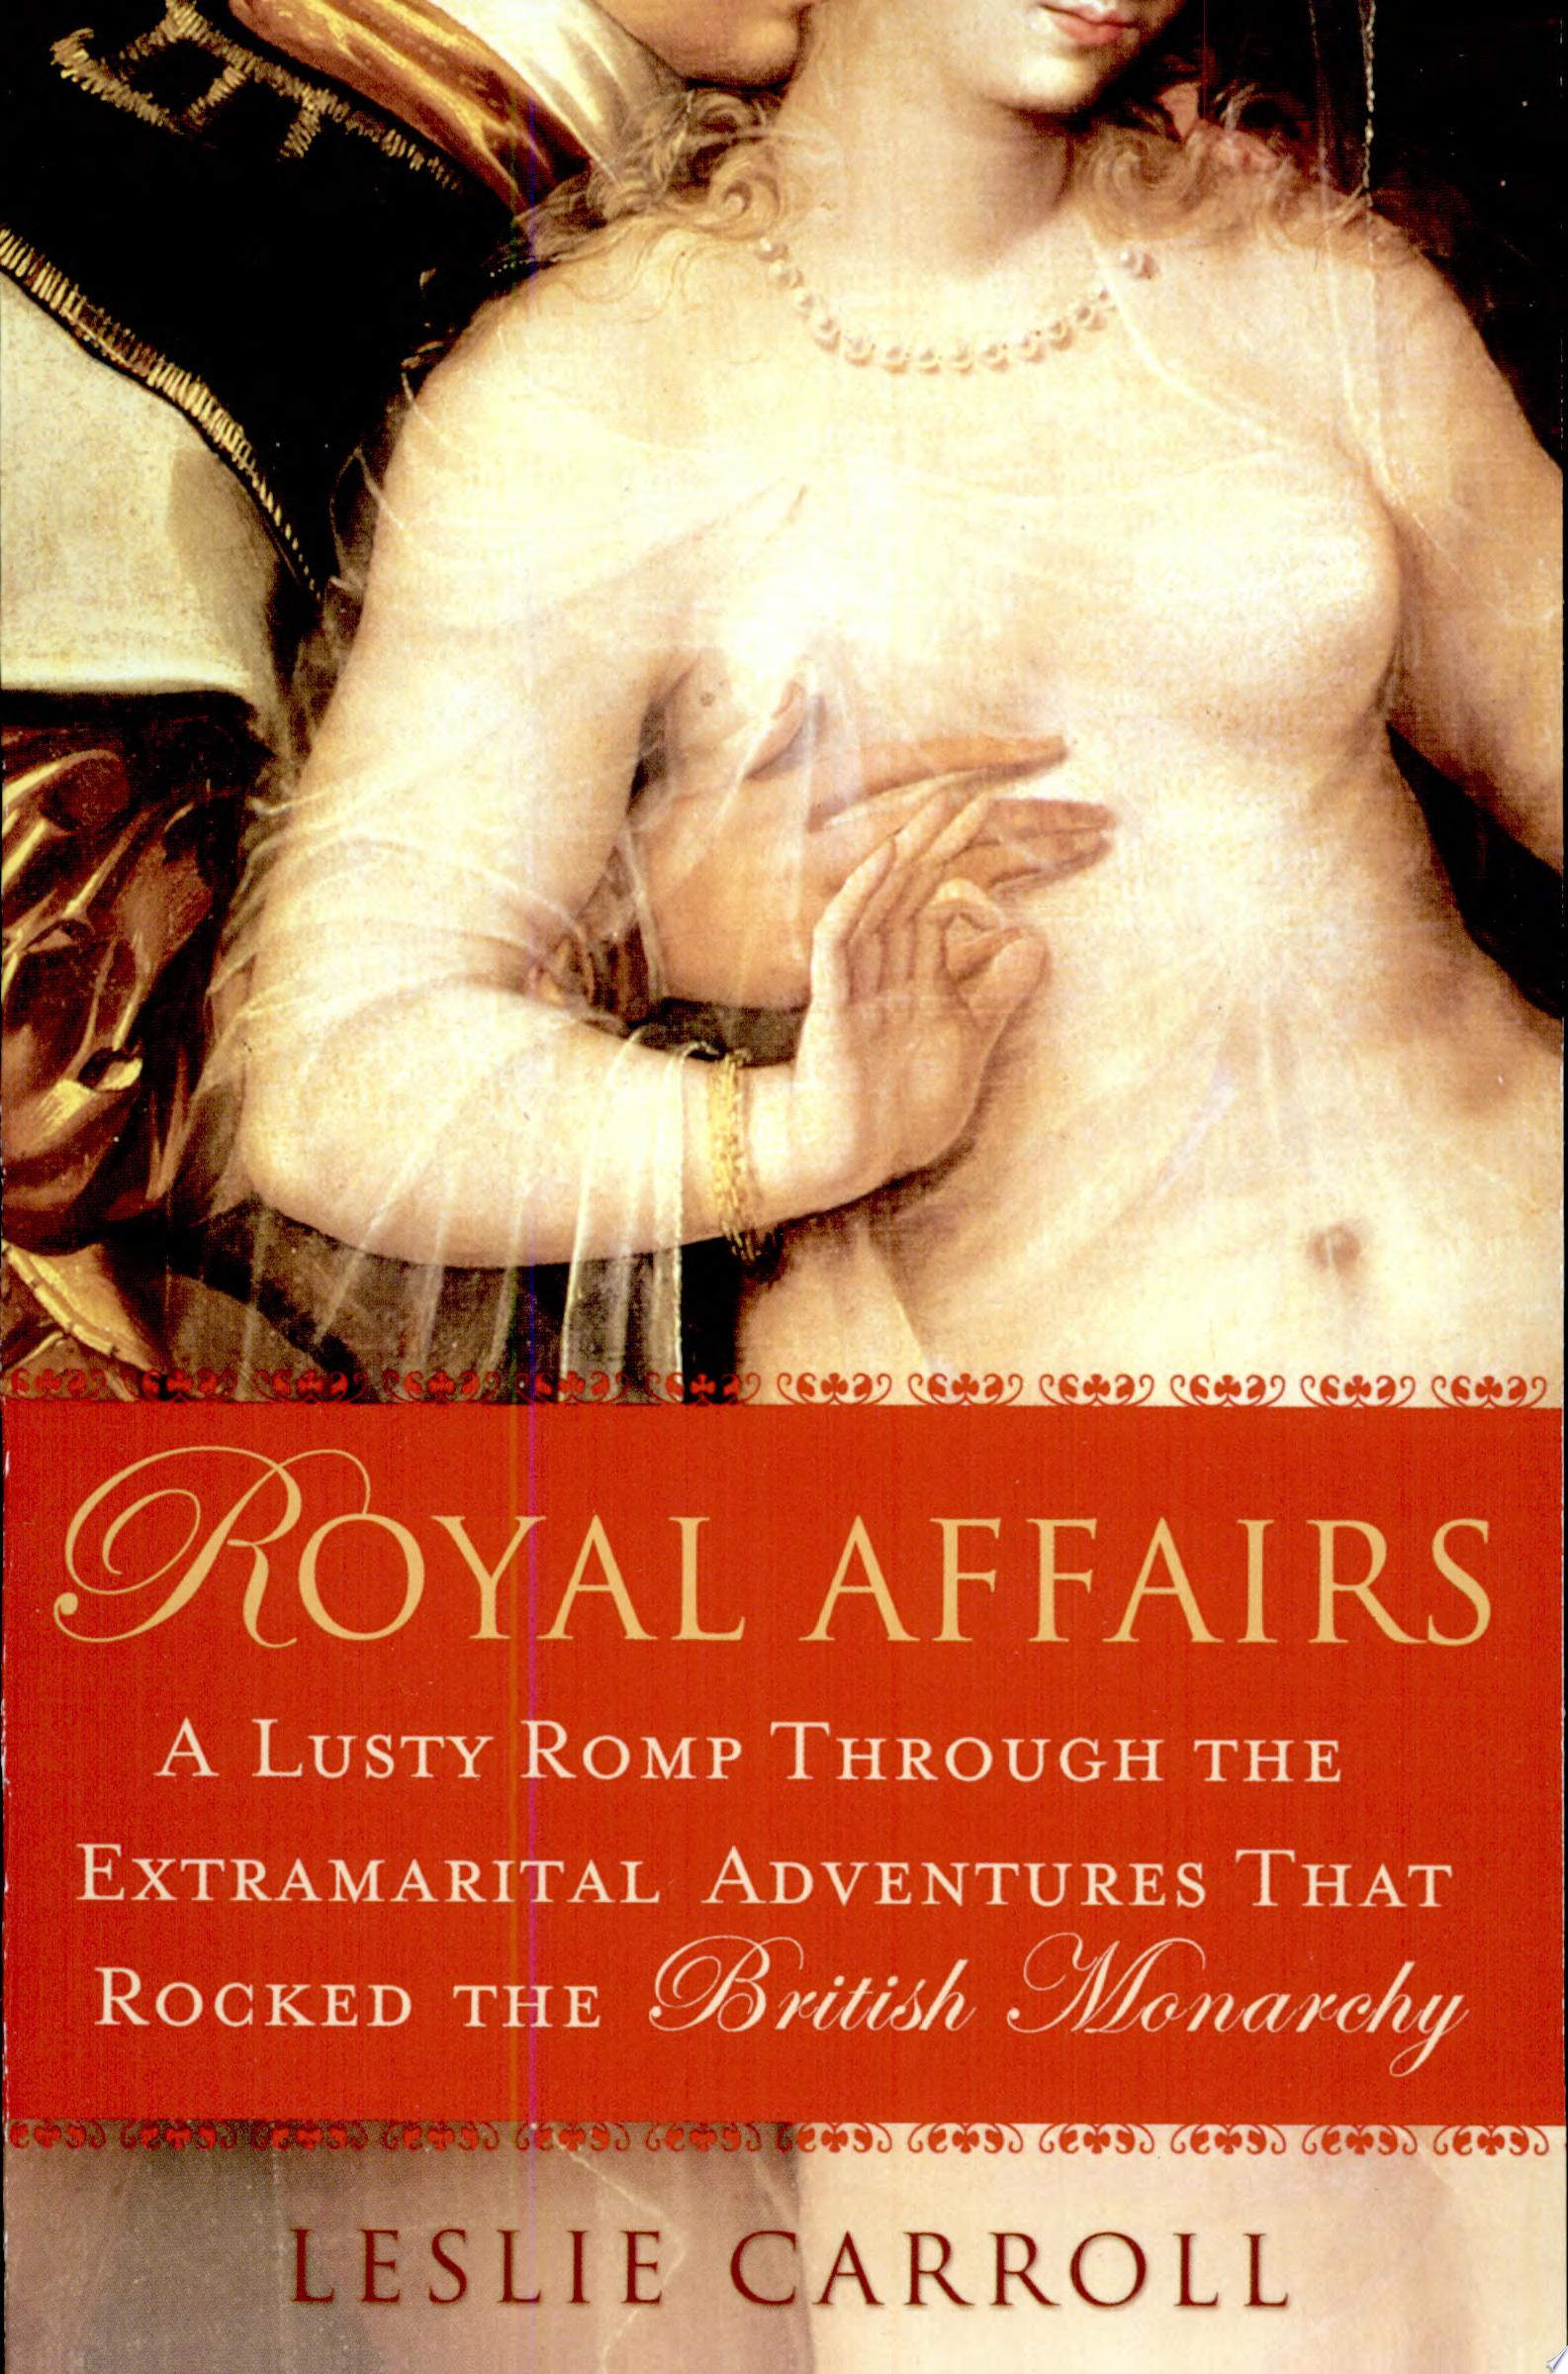 Image for "Royal Affairs"